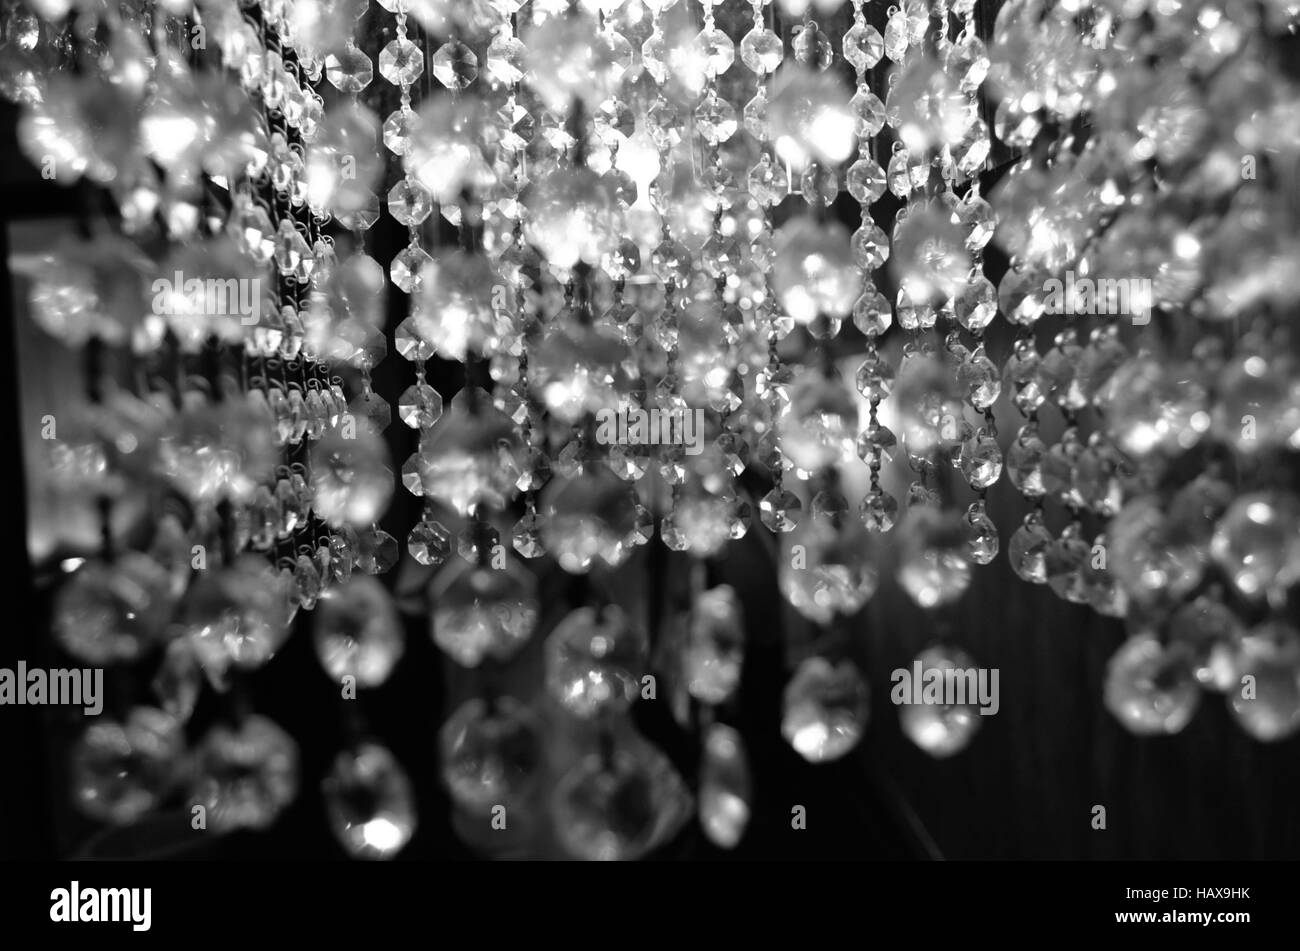 orange pendant lamp with small glass diamonds on a dark blurred background Stock Photo